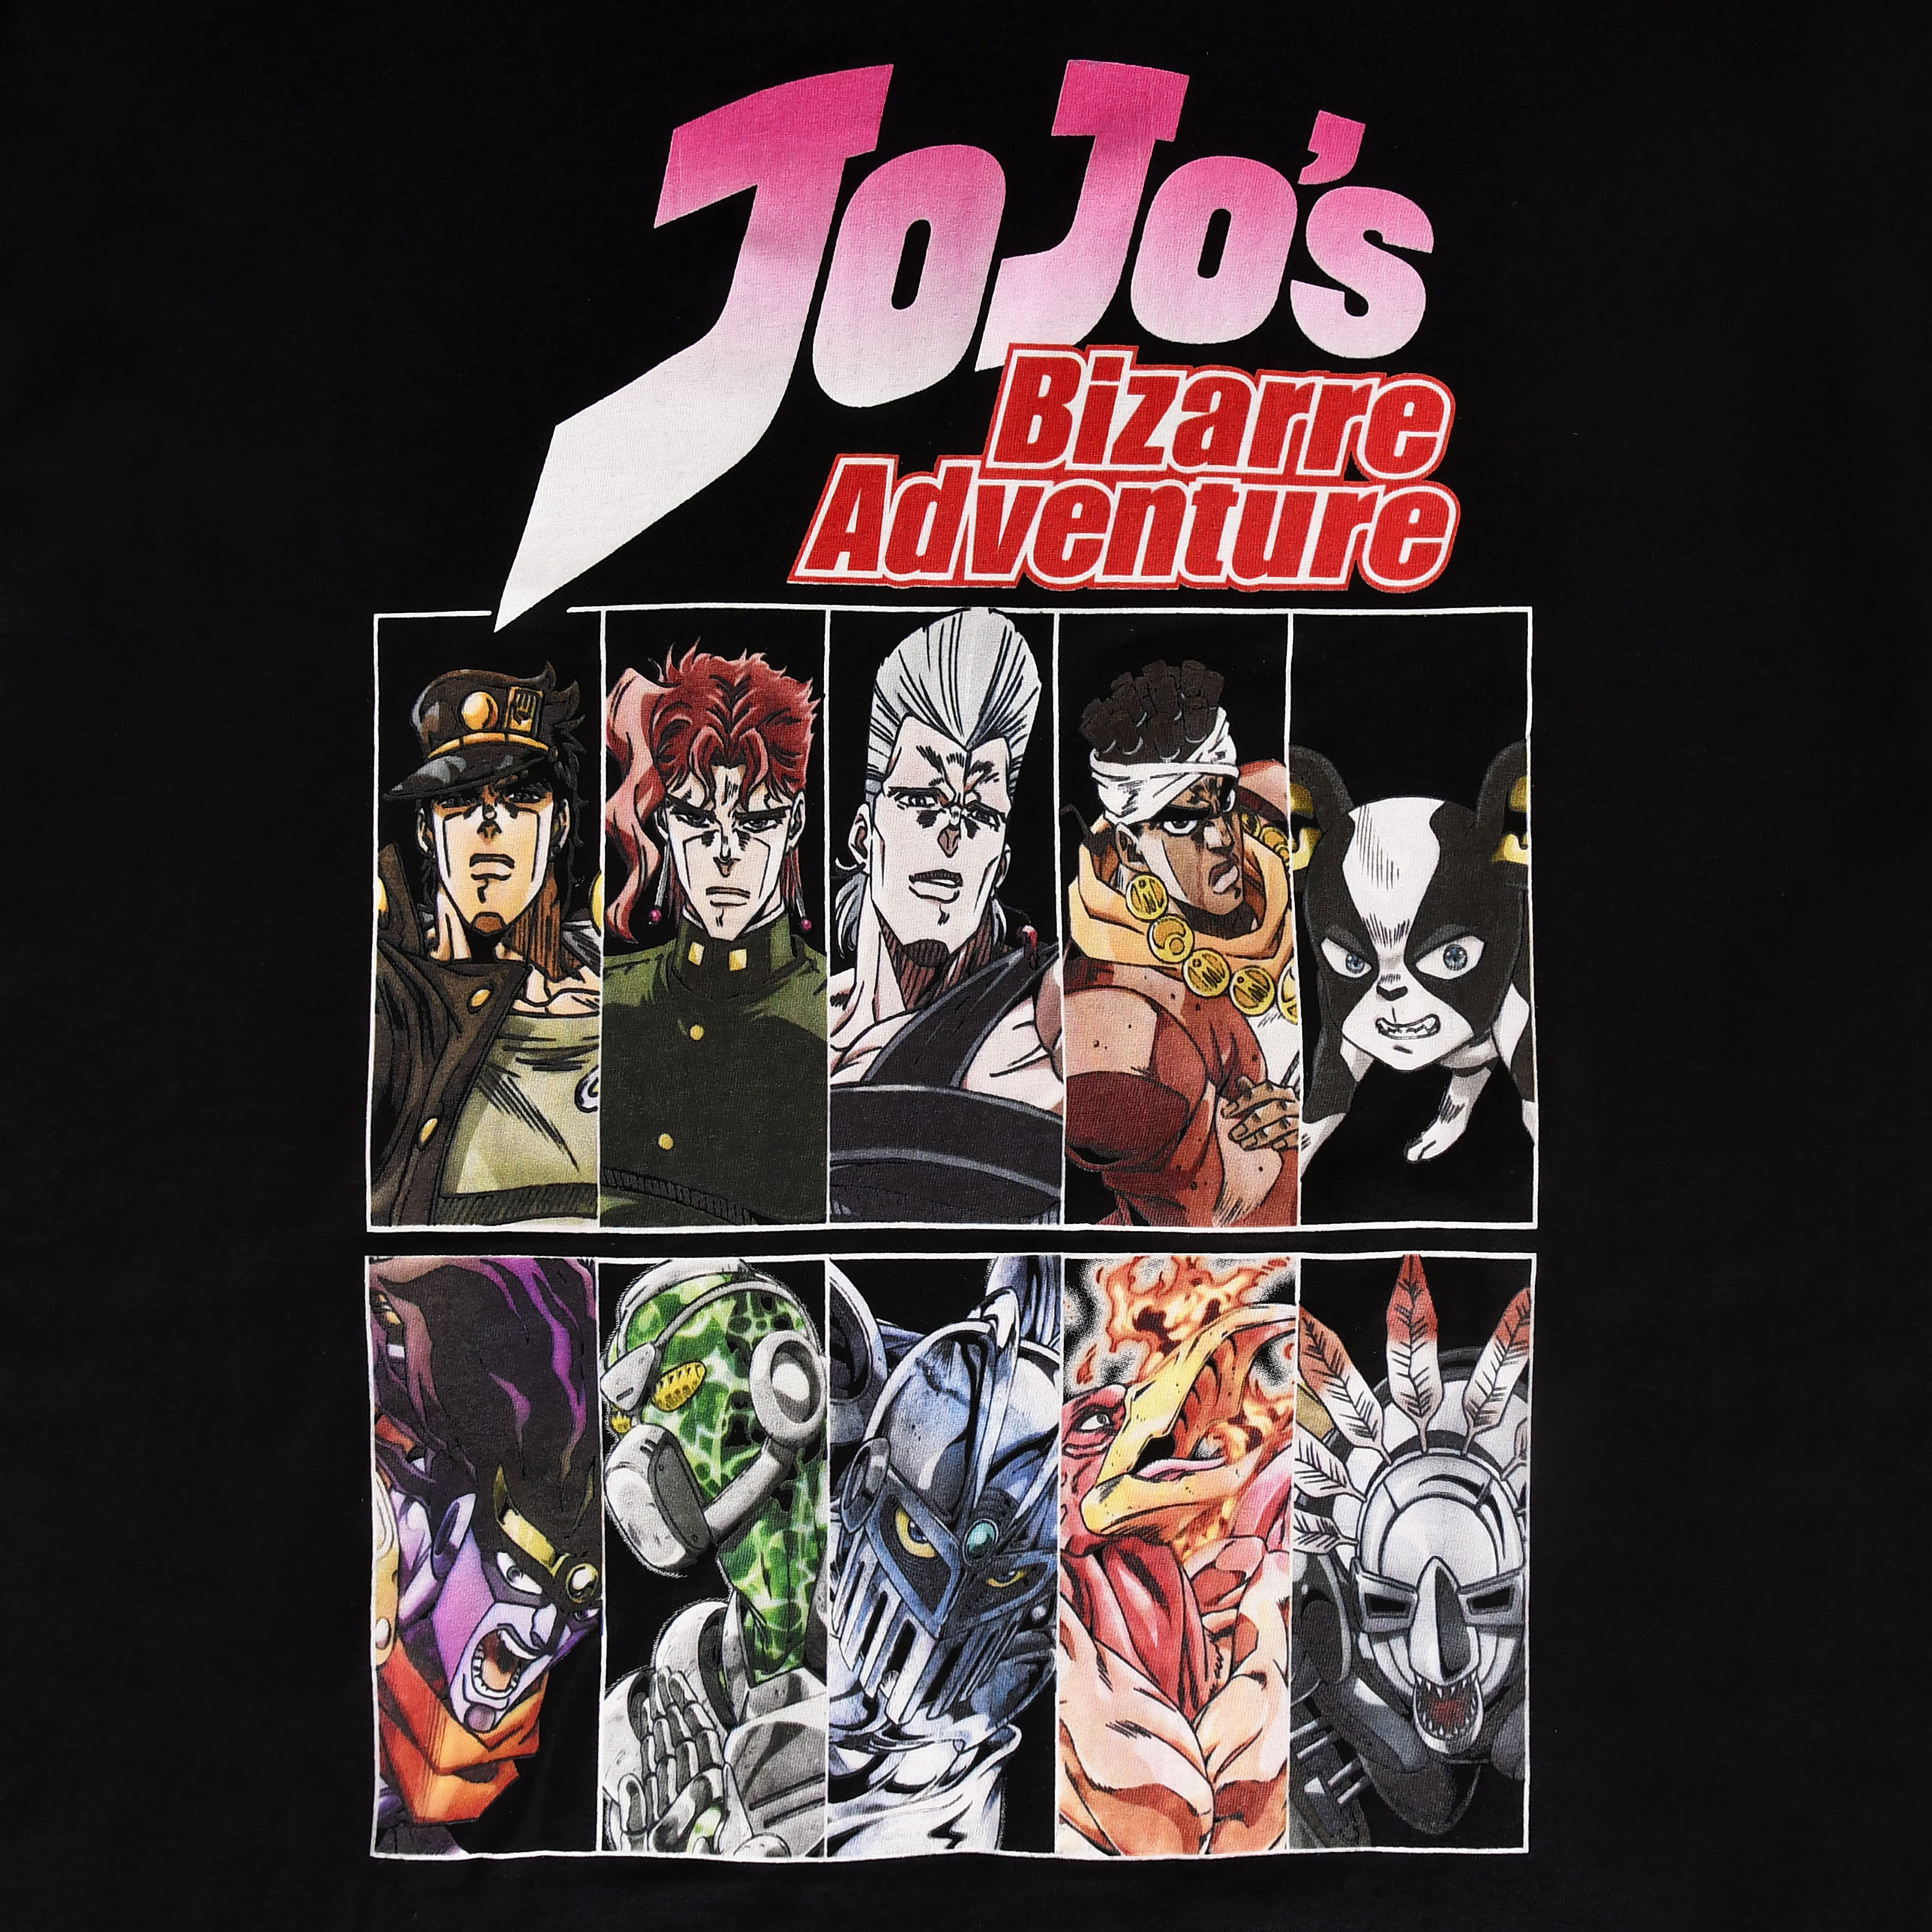 JoJo's Bizarre Adventure - Personage T-shirt zwart